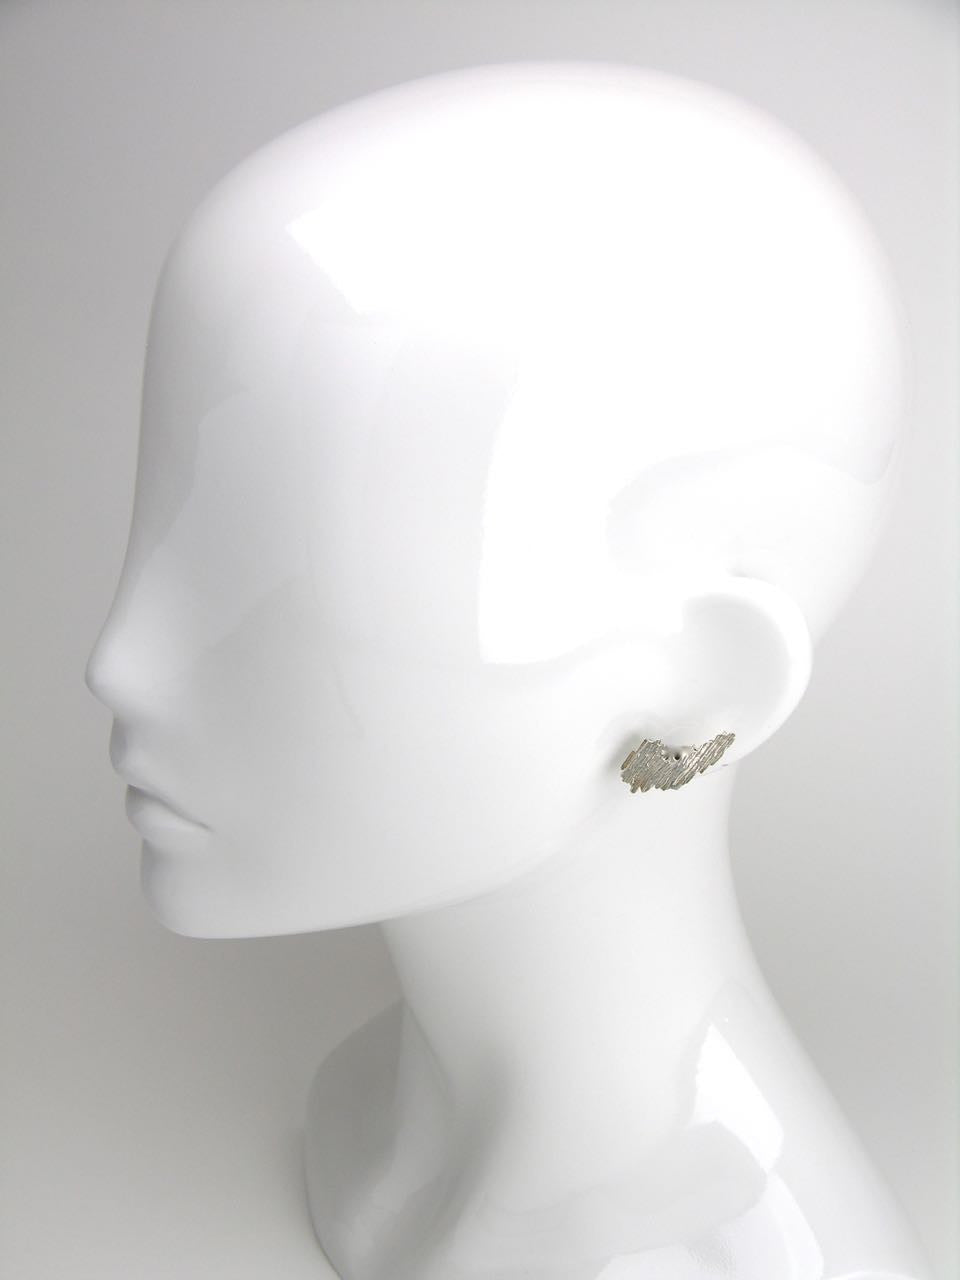 Vintage Anton Michelsen silver textured clip earrings